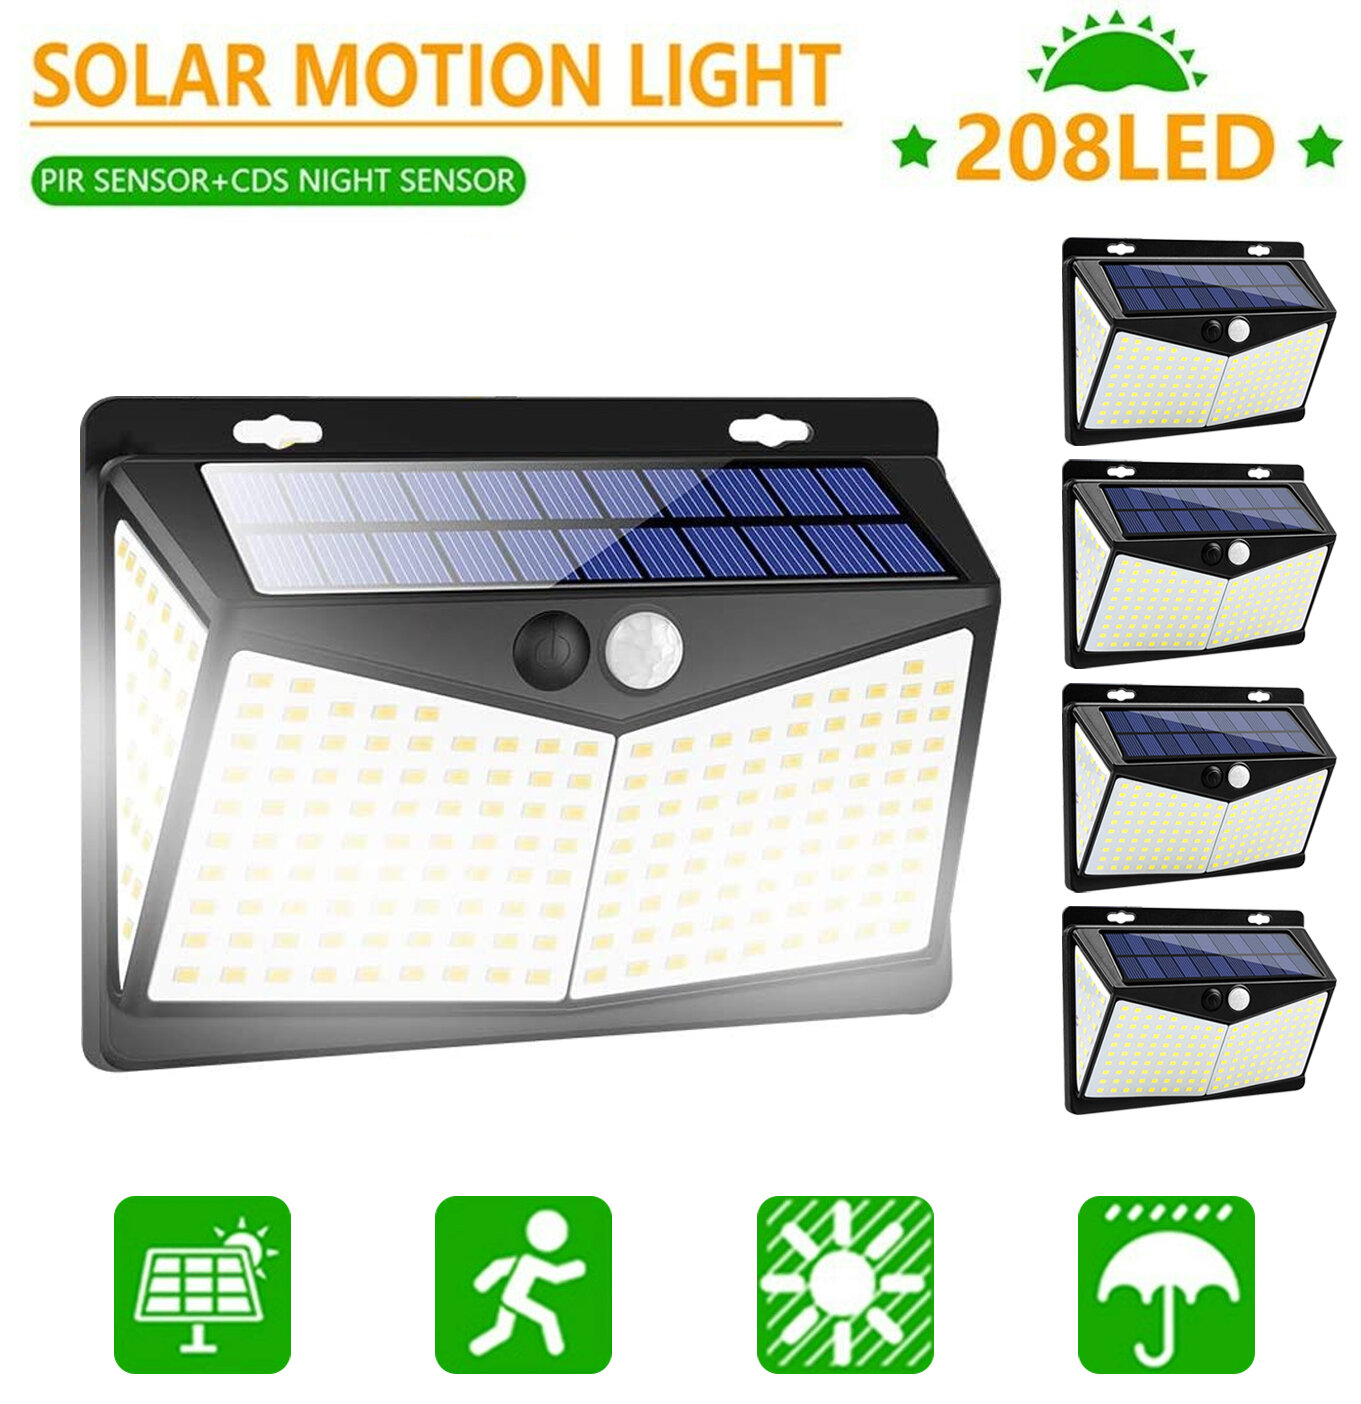 208 LED PIR Motion Sensor Solar Power Waterproof Garden Light Outdoor Yard Lamp 